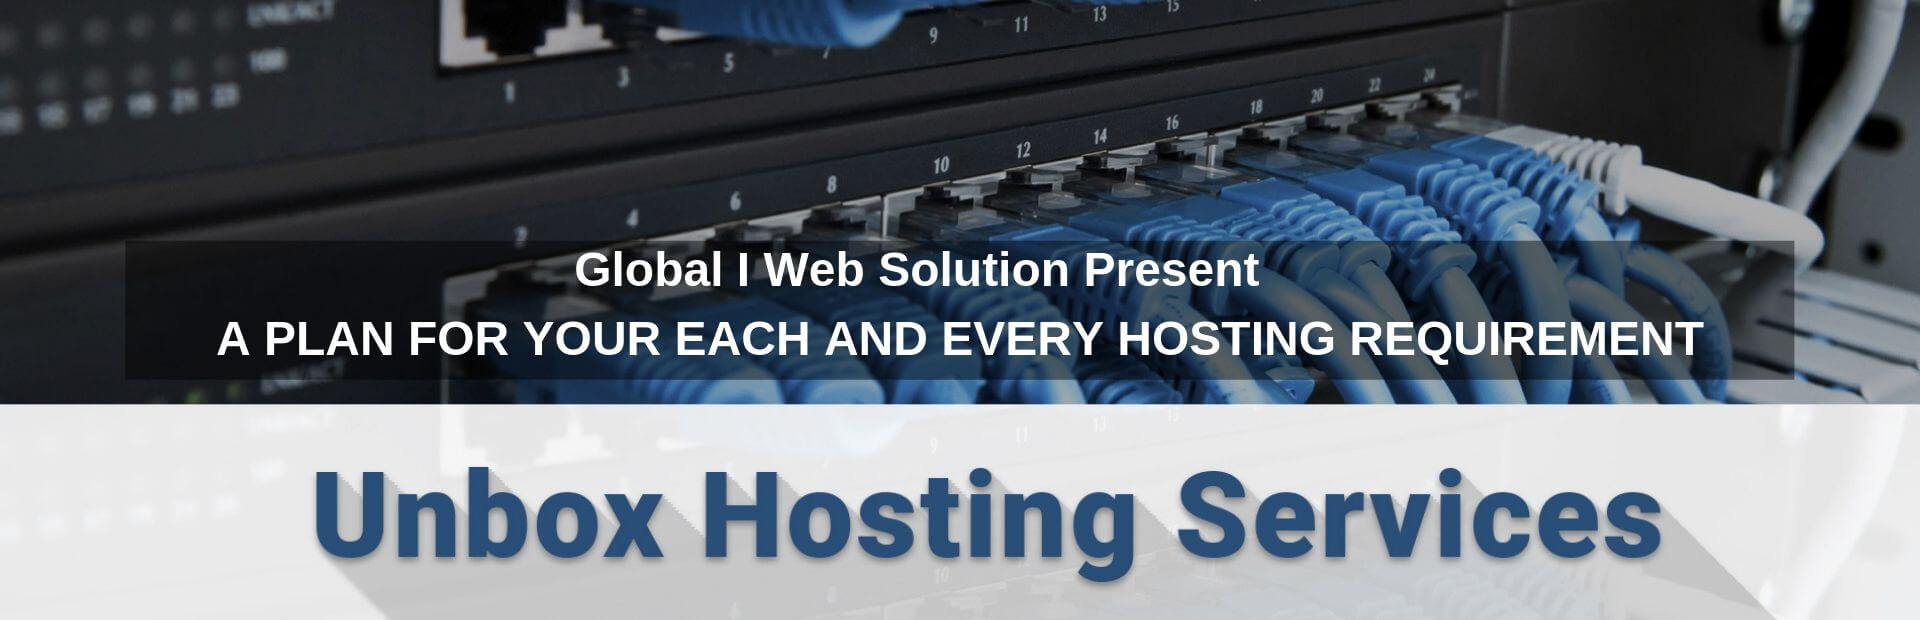 web hosting plan